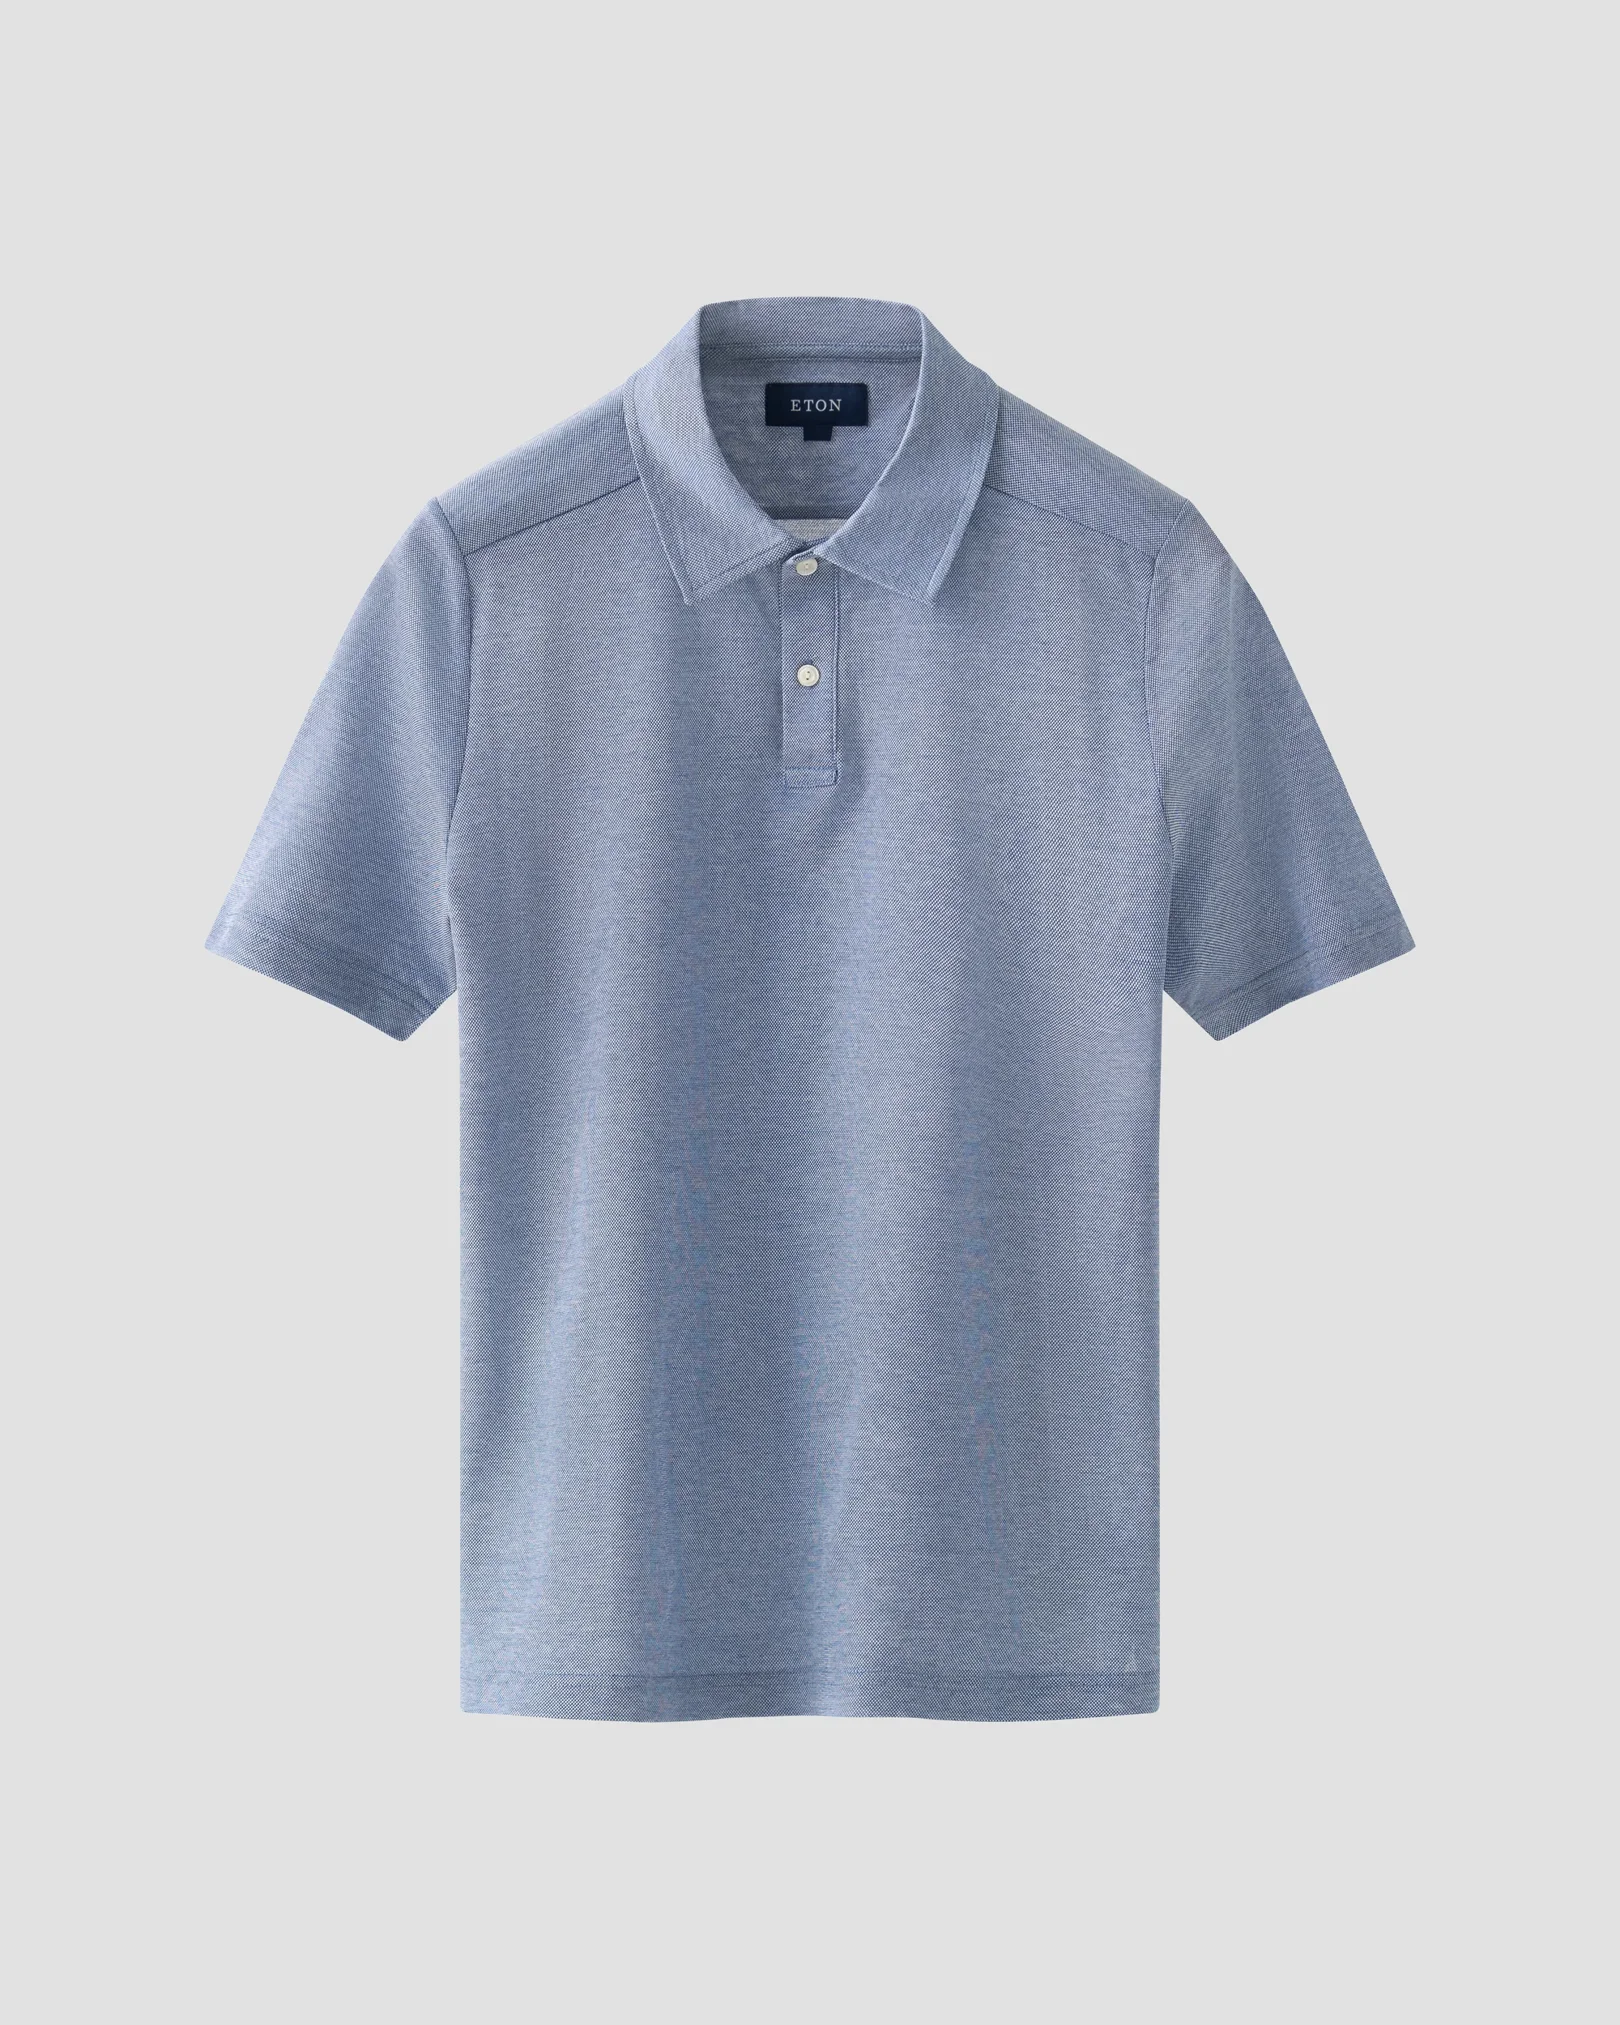 Eton - dark blue oxford pique polo shirt